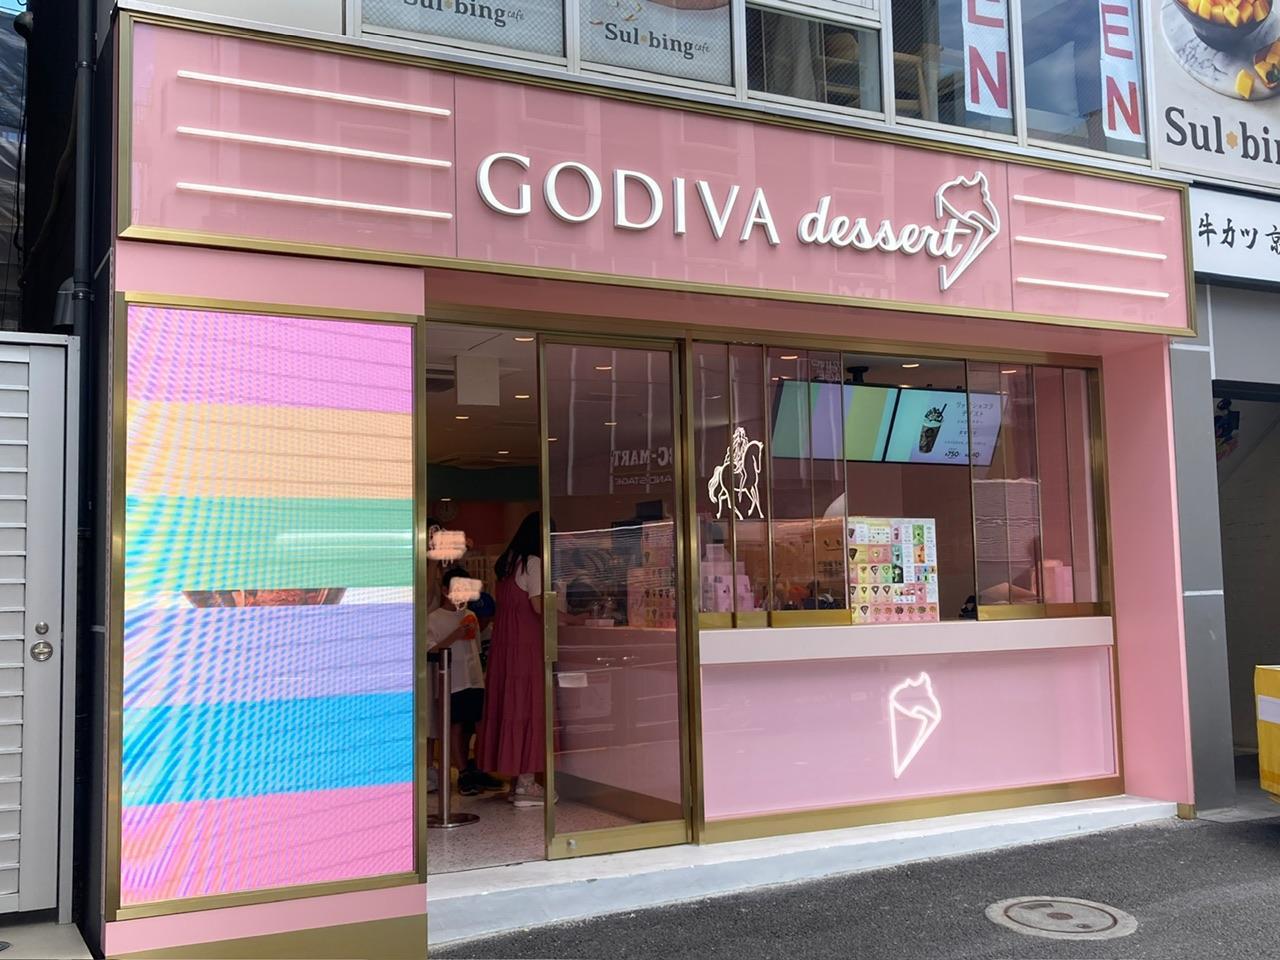 GODIVA dessert 原宿店 （ゴディバ デザート）